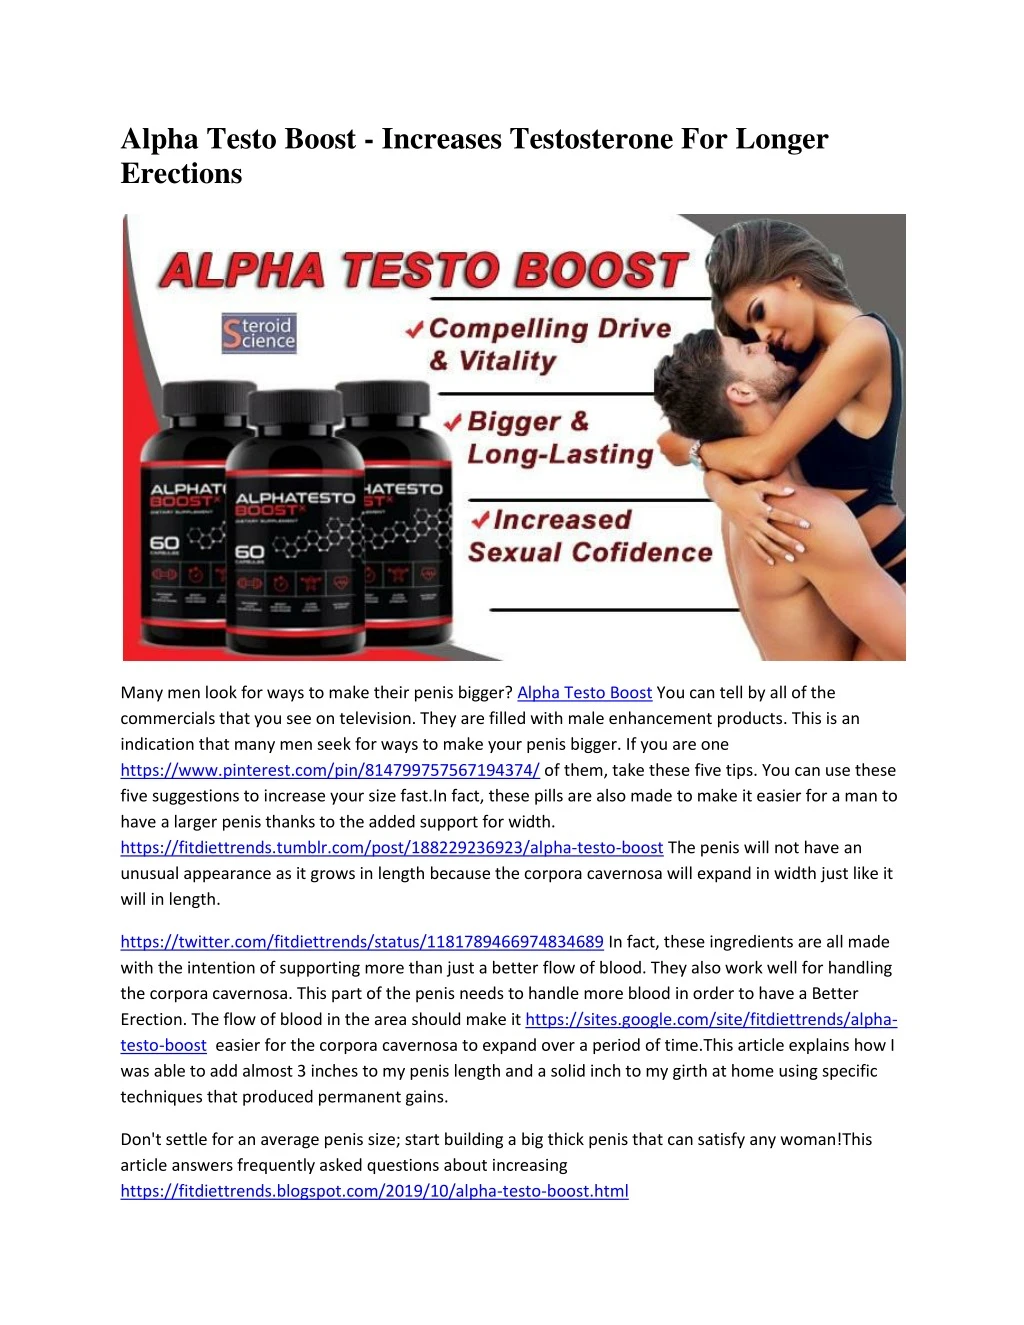 alpha testo boost increases testosterone